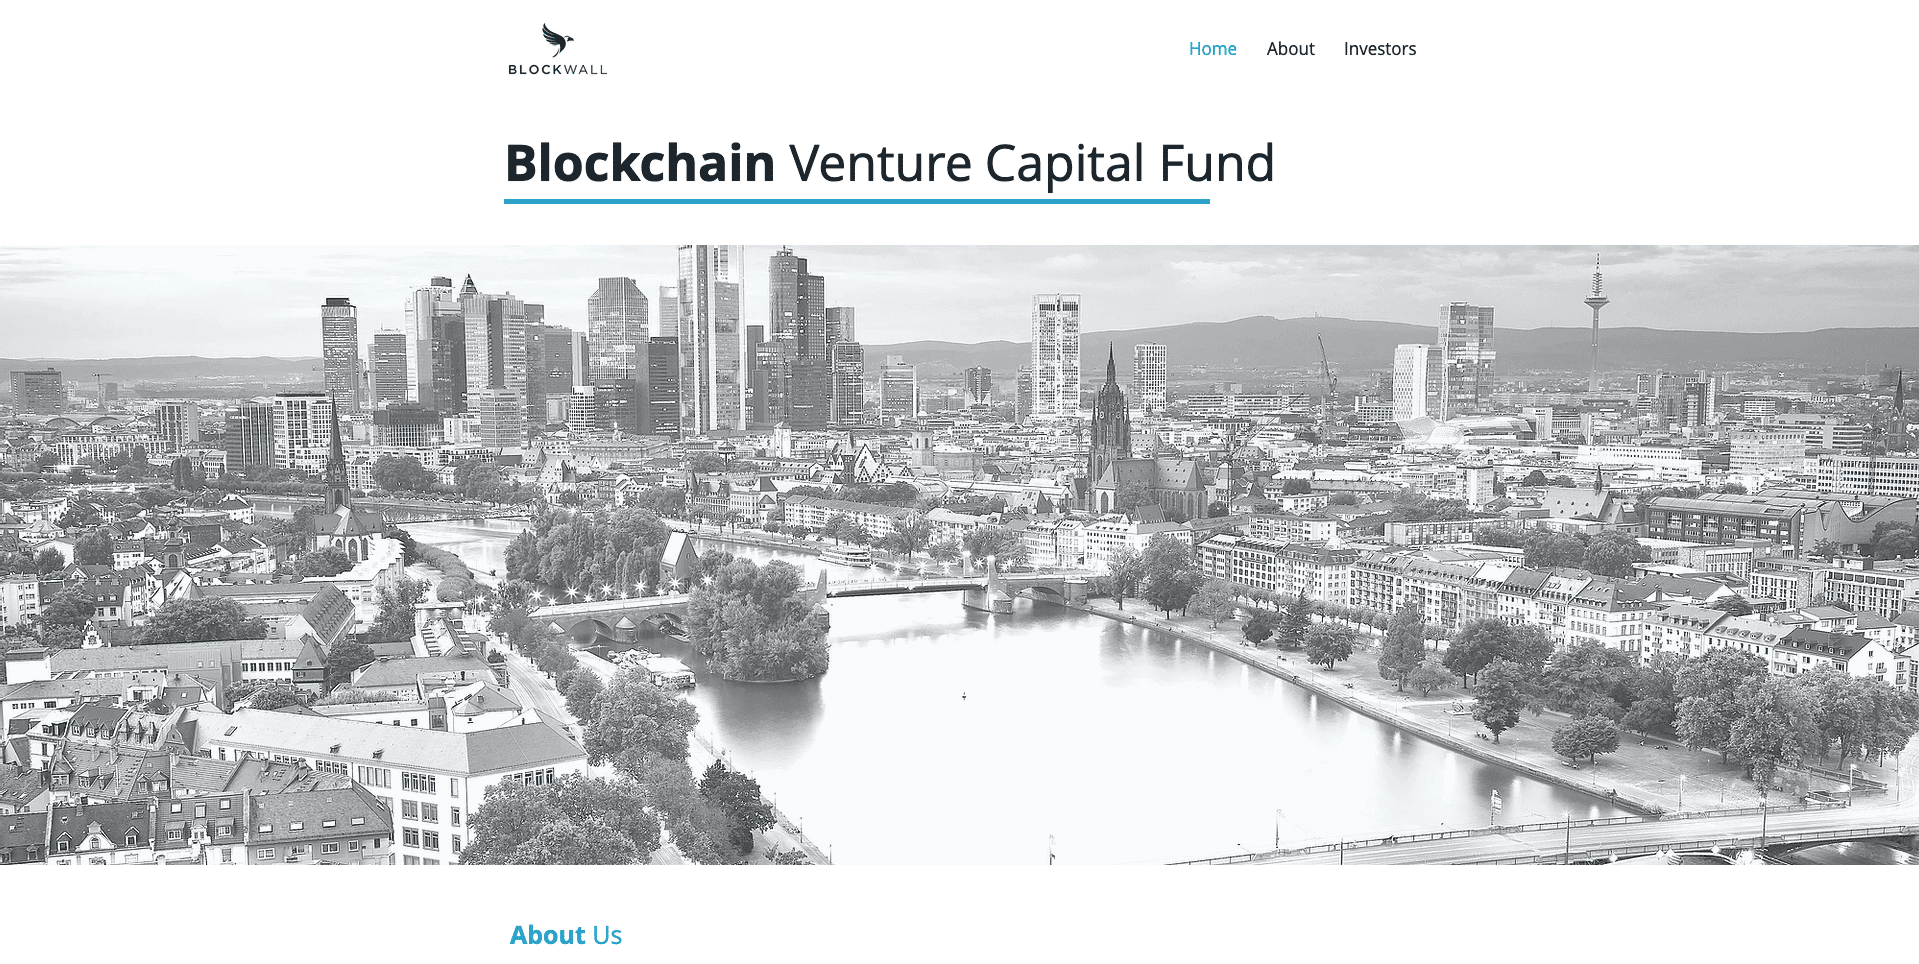 Blockwall Capital 1 Fund